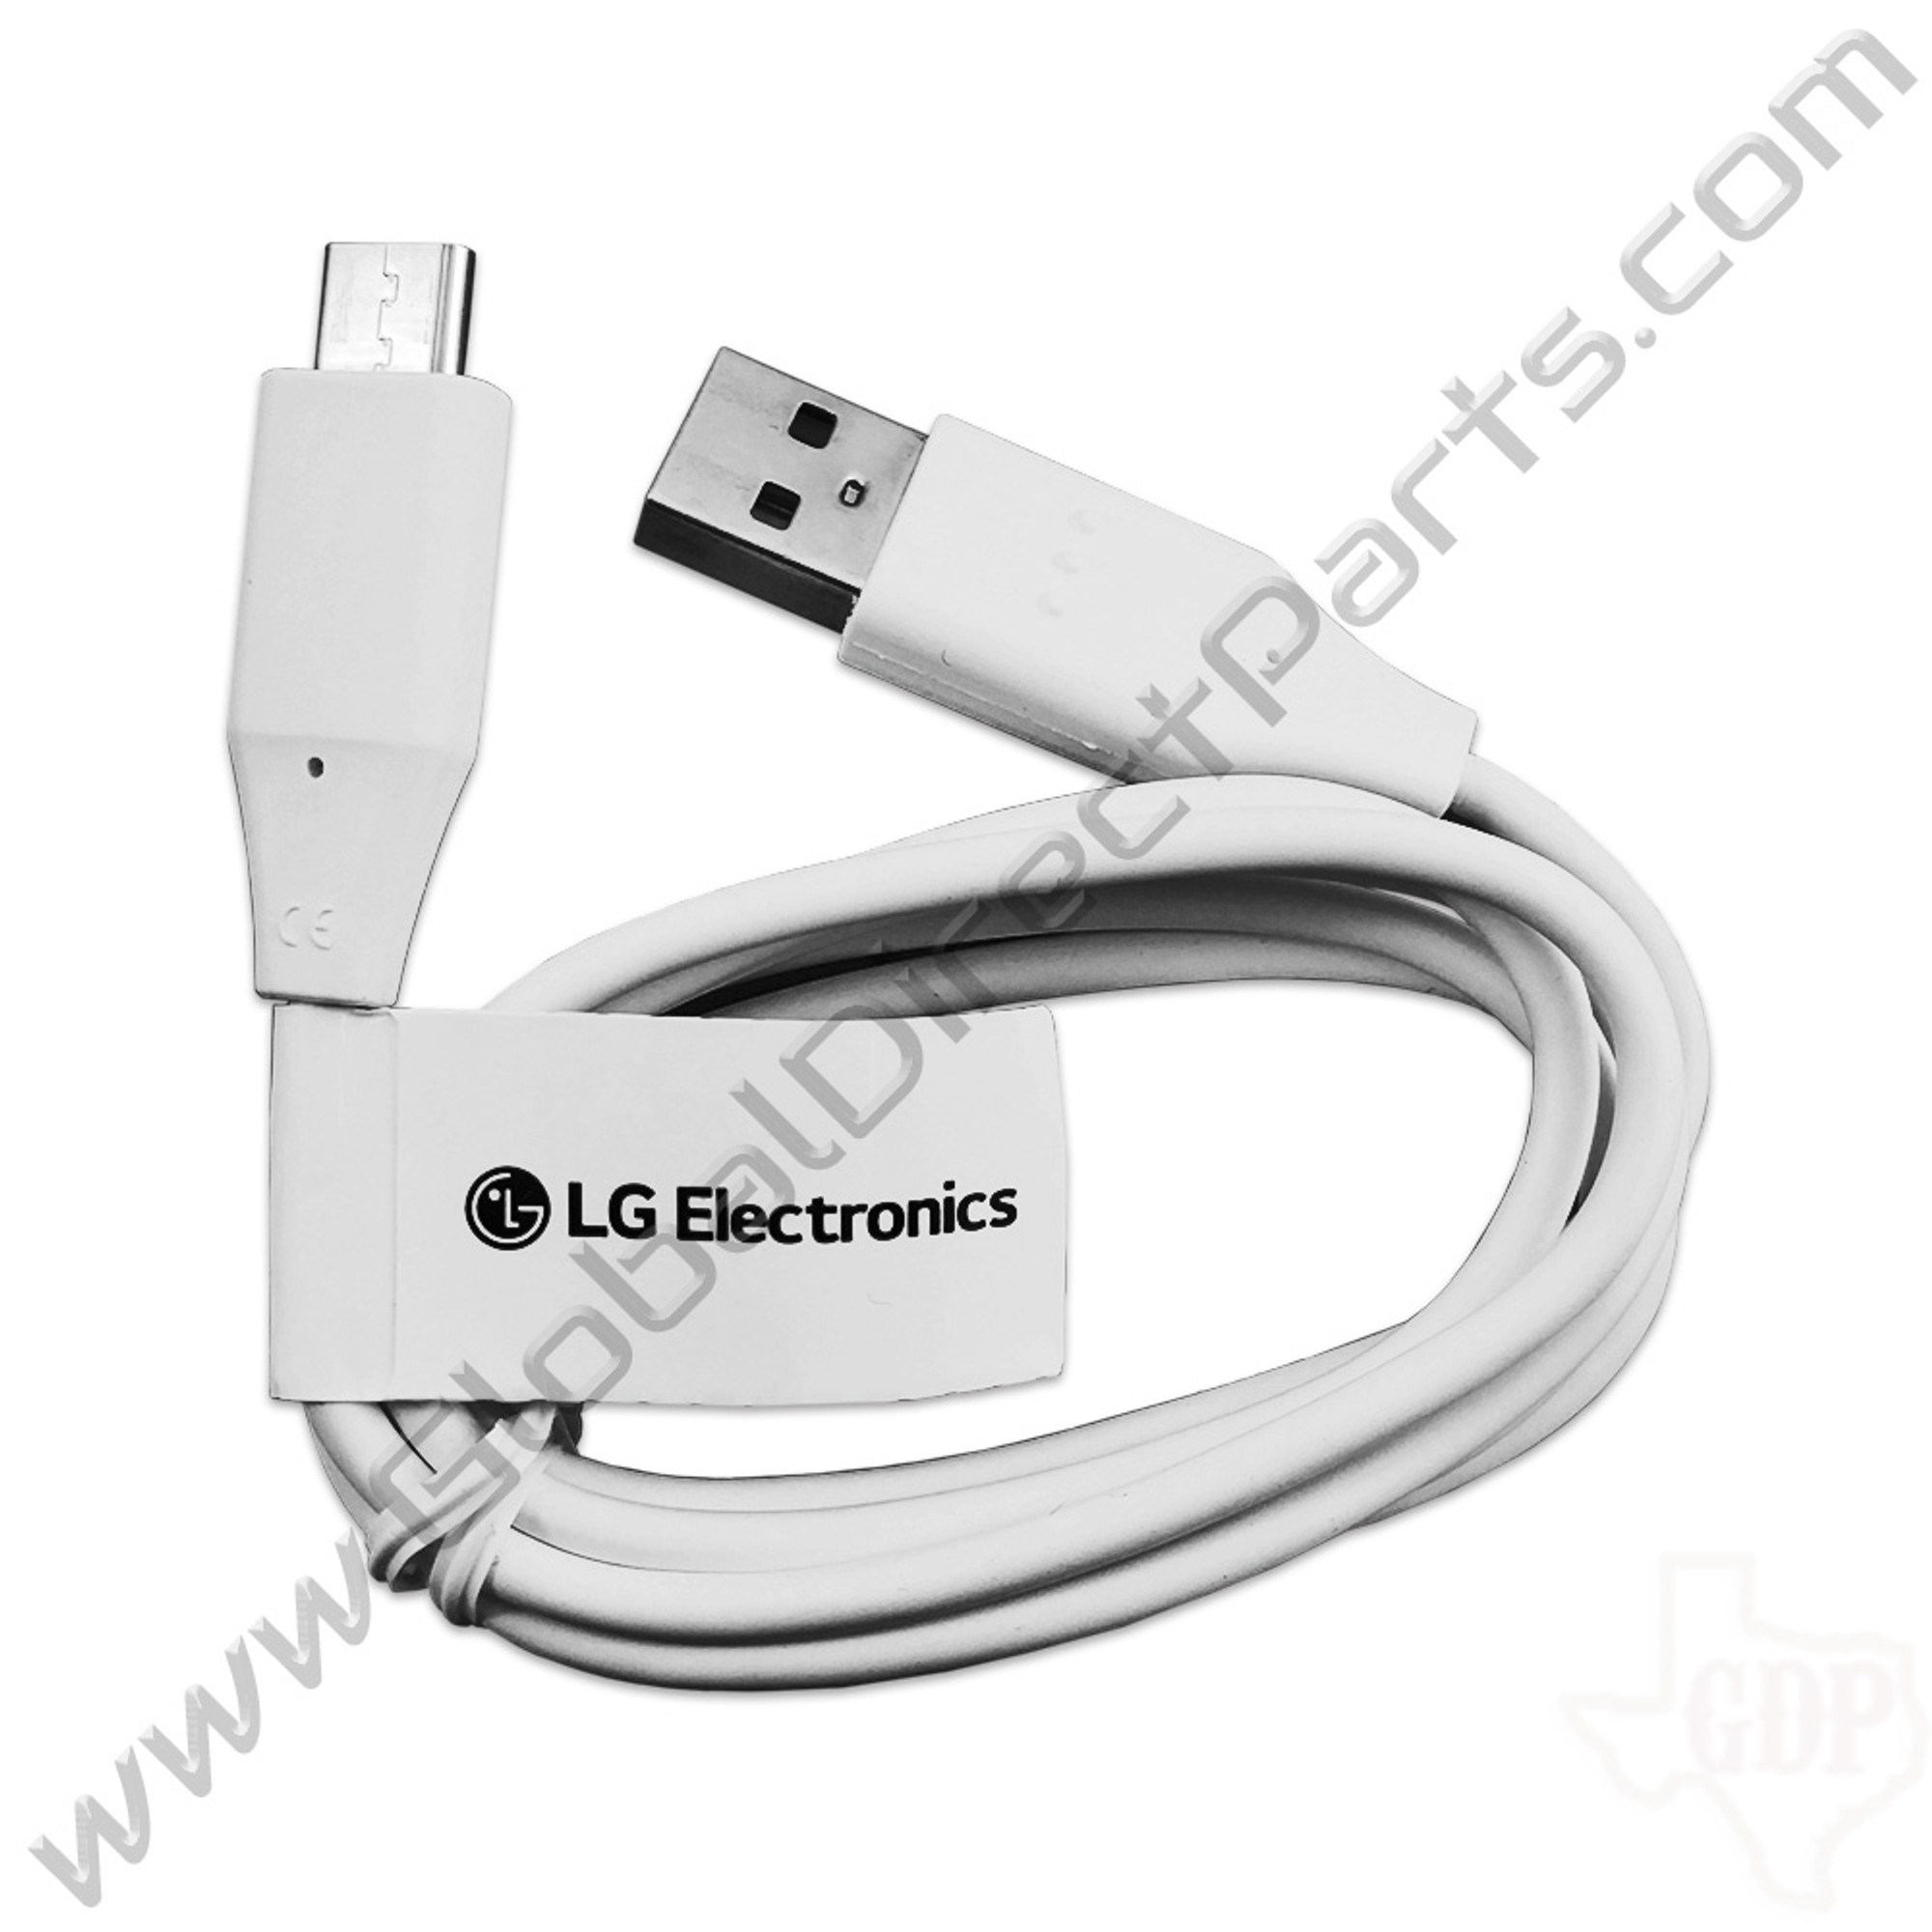 Lg usb c. Кабель для LG ke850. 50pk560 LG USB Port. Fast Charging LG v10. LG Types.